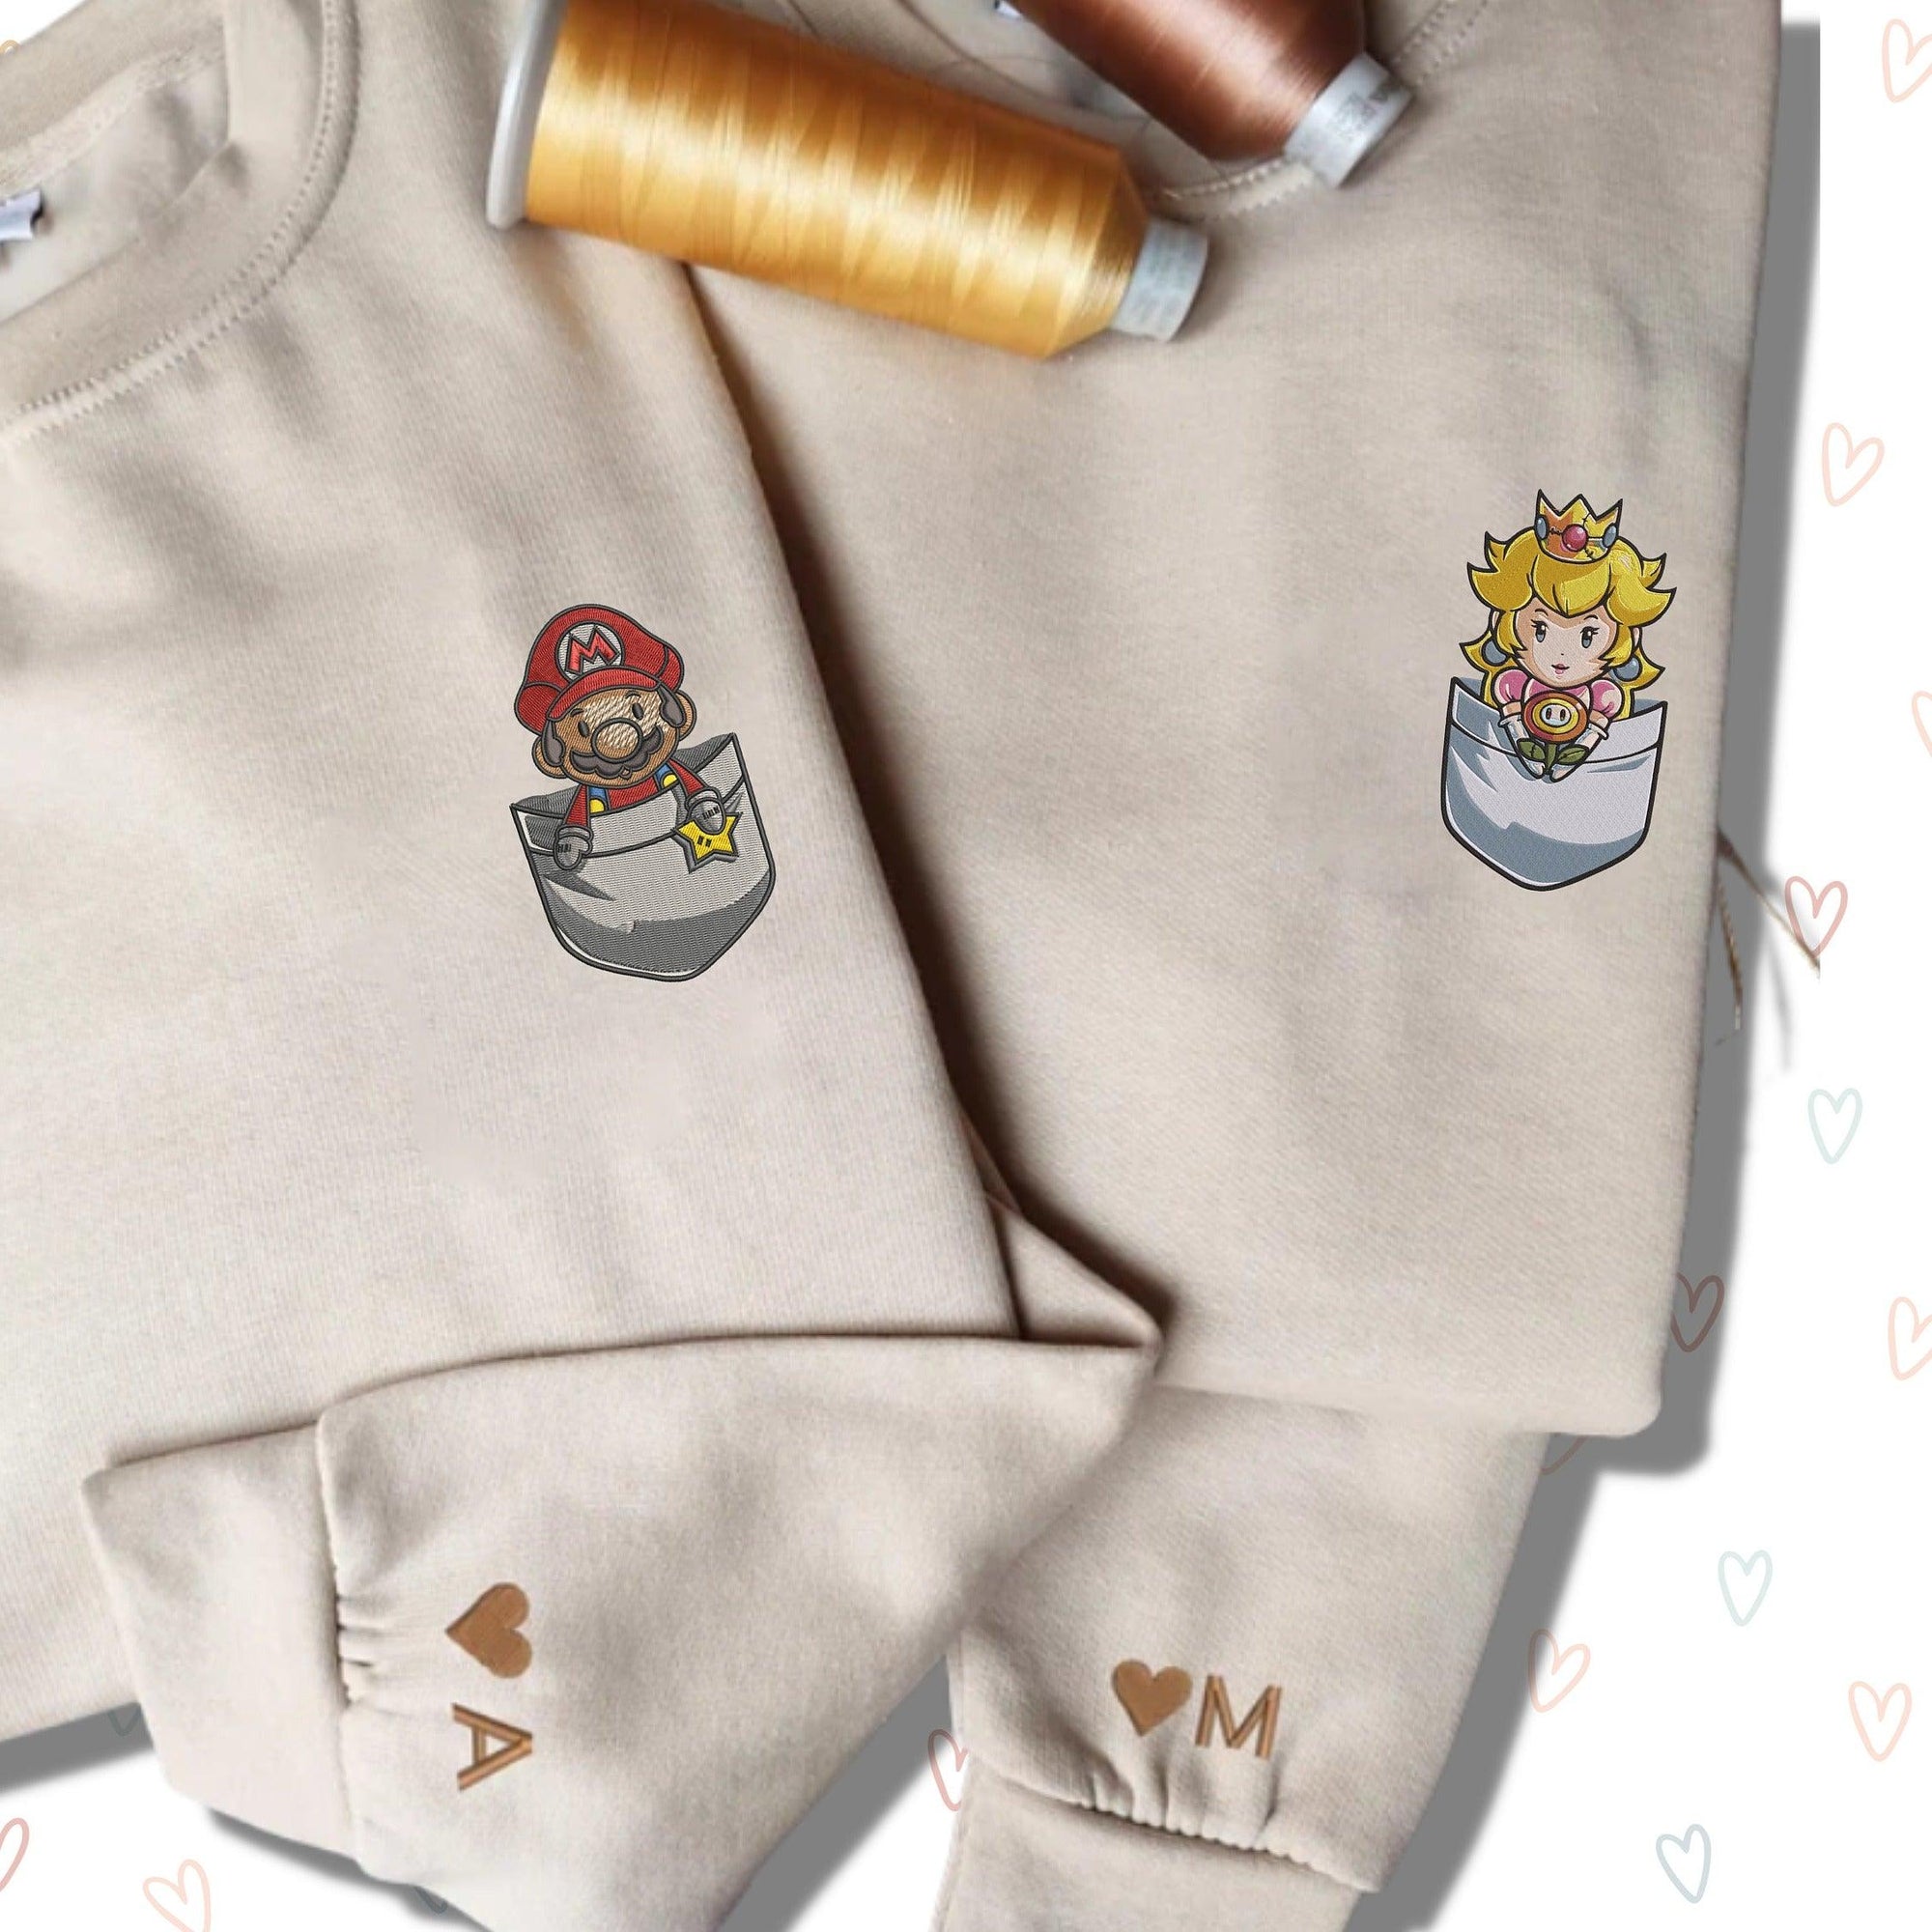 Custom Embroidered Sweatshirts For Couples, Custom Matching Couple Hoodies, Cartoon Mario and Princess Embroidered Matching Couples Sweatshirt